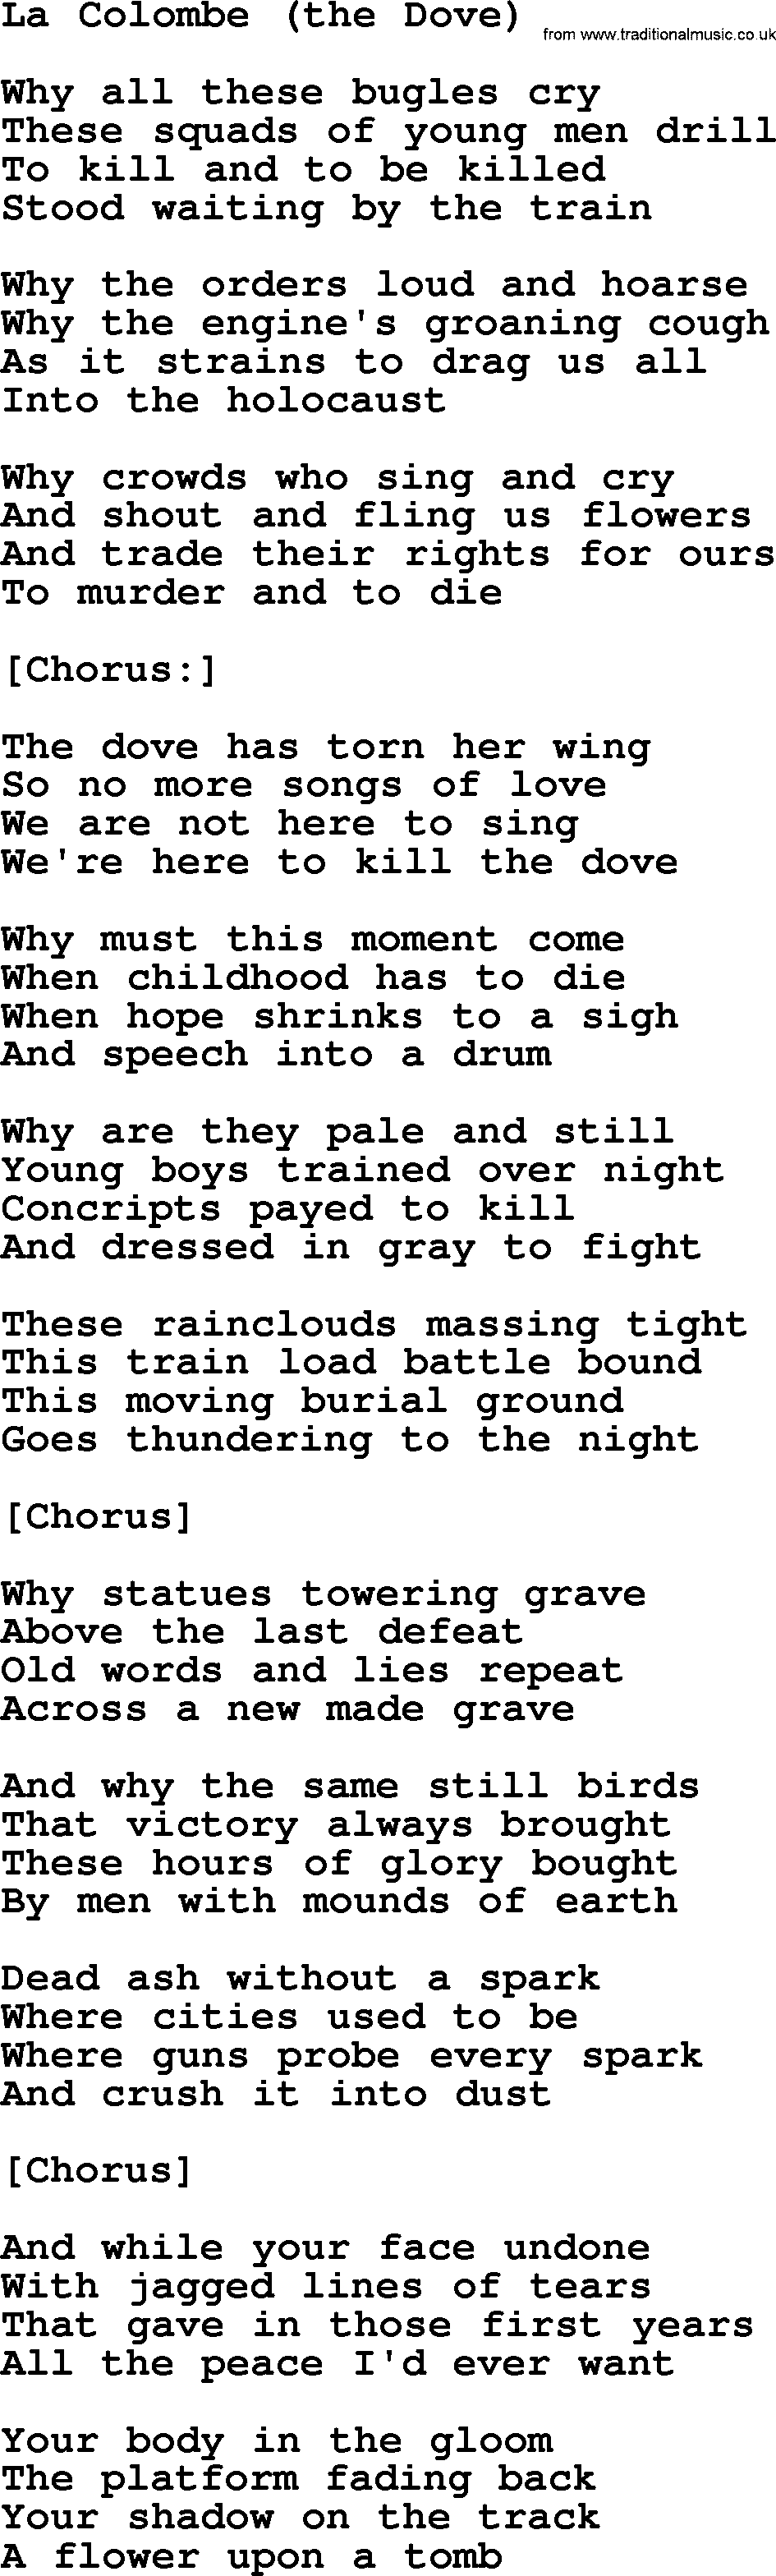 Joan Baez song La Colombe(The Dove), lyrics